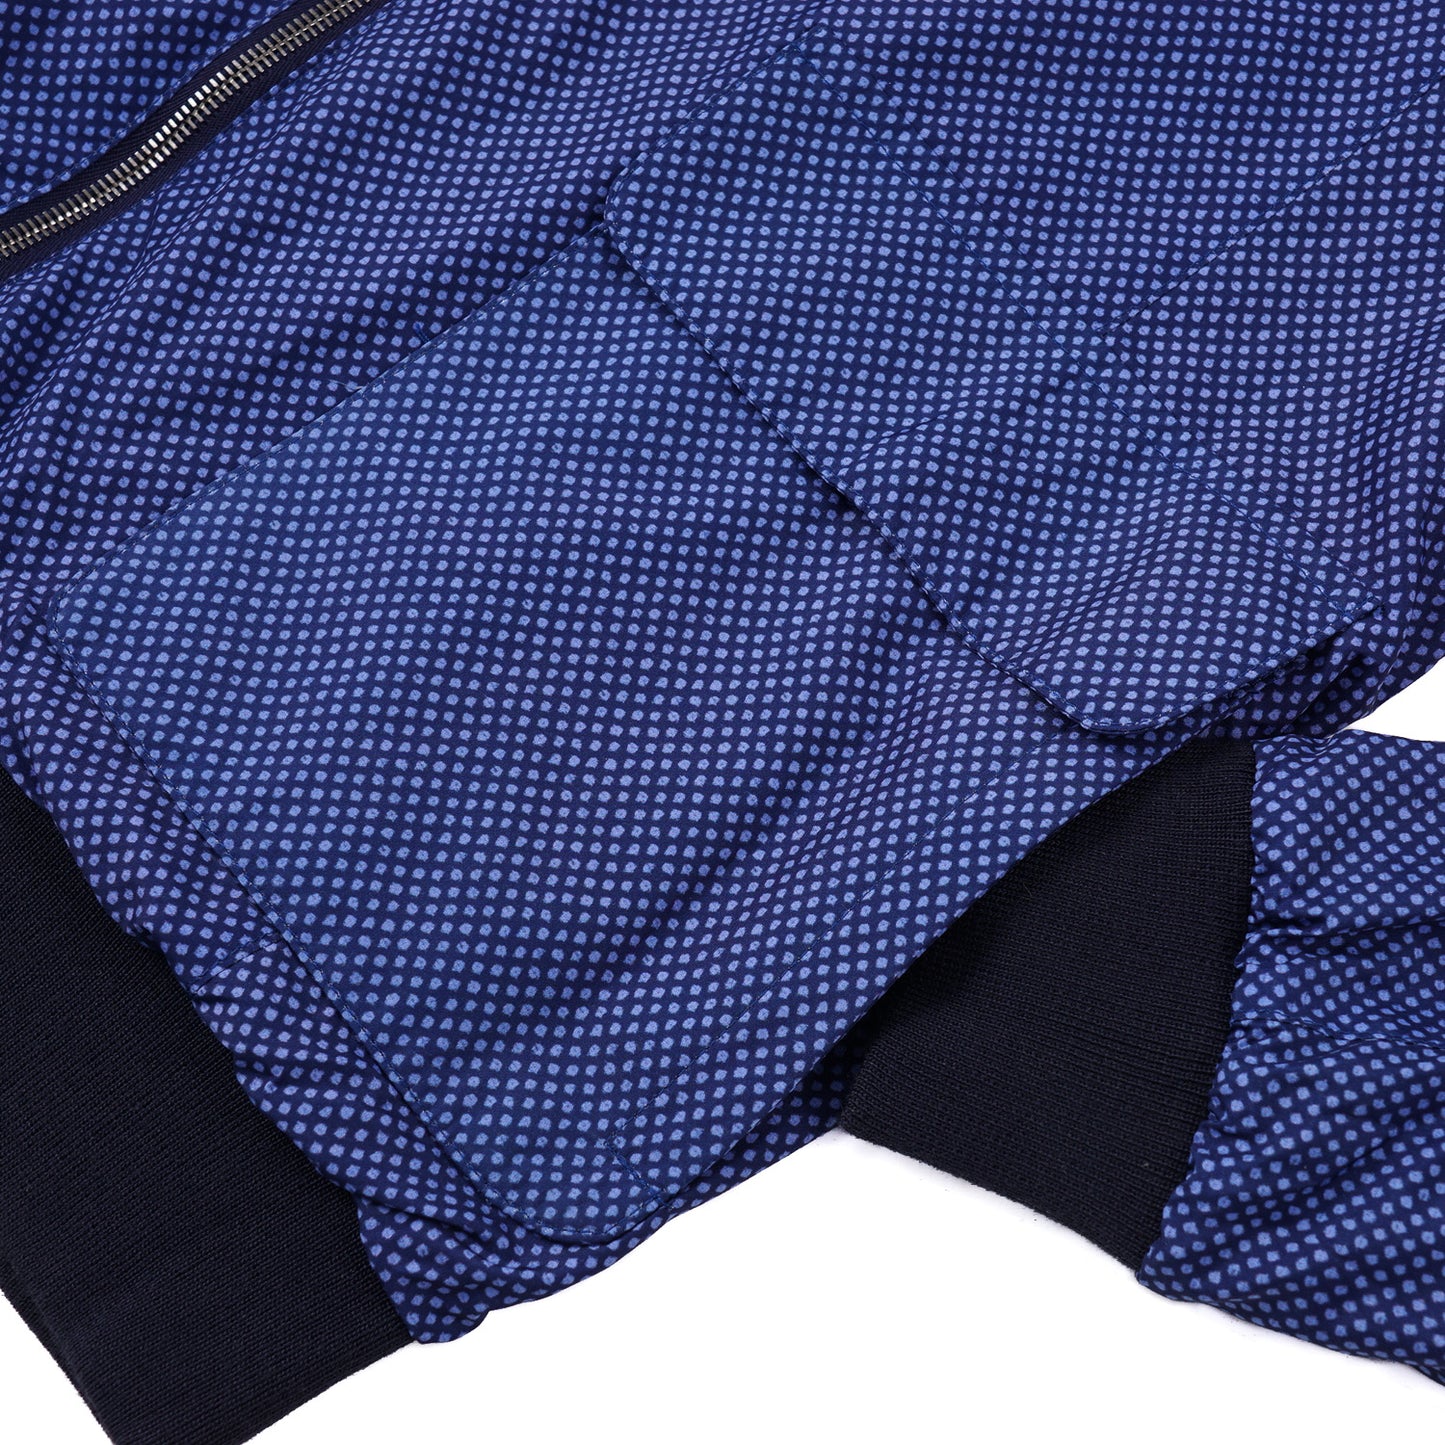 Isaia Reversible Wool Bomber Jacket - Top Shelf Apparel